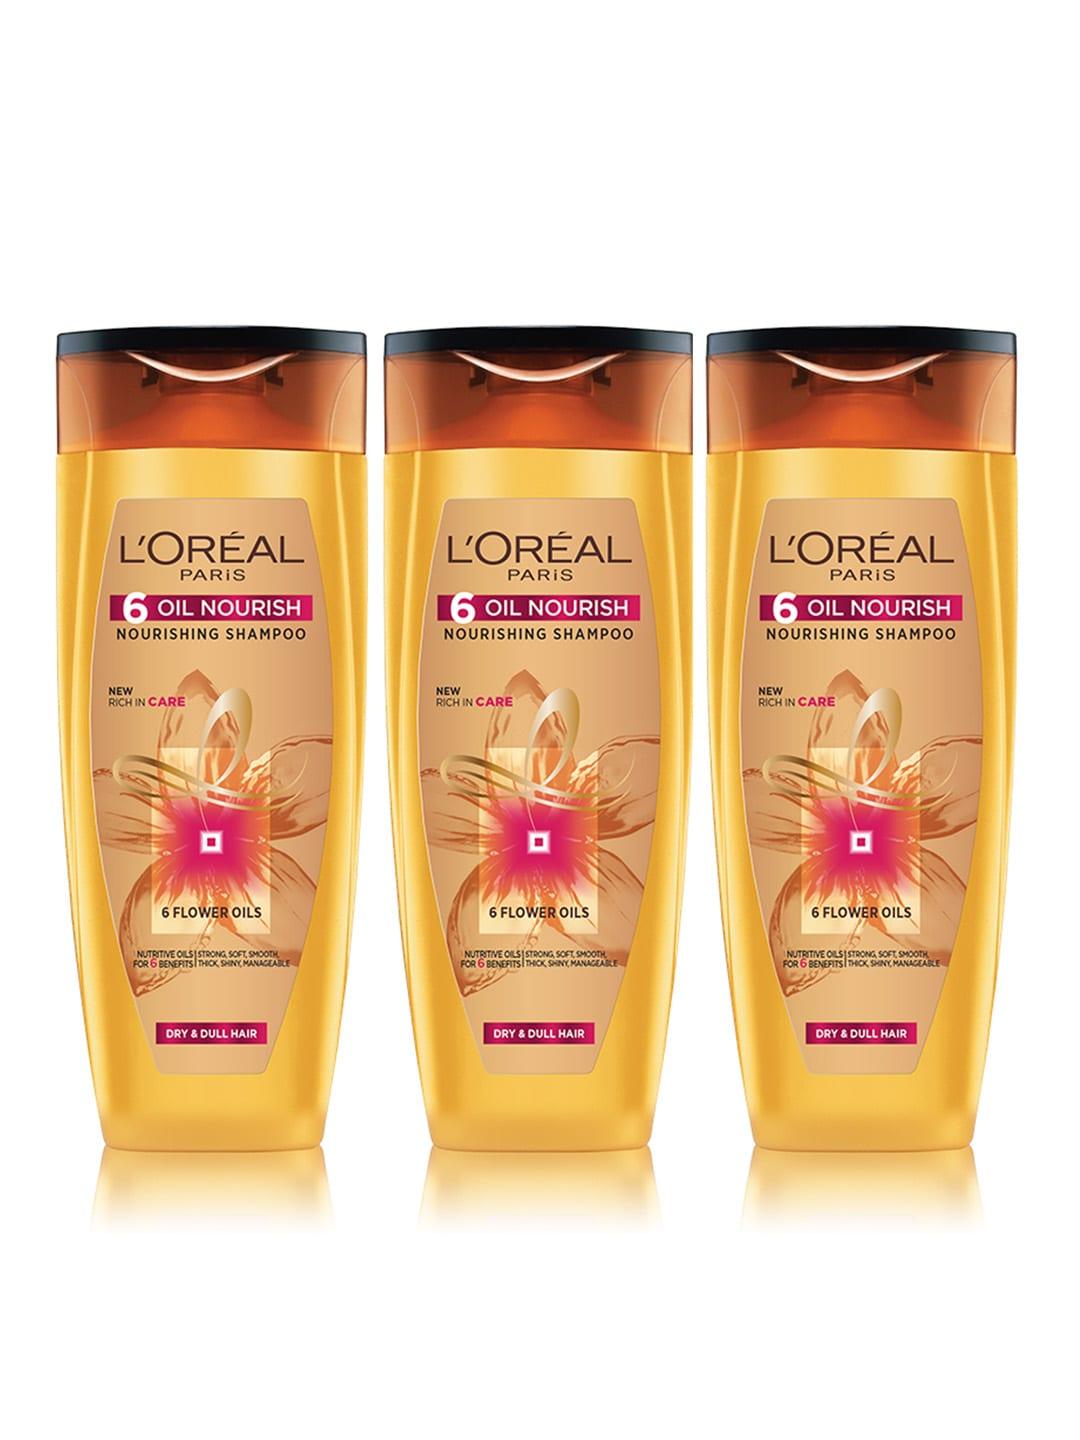 loreal paris set of 3 6-oil nourish shampoos - 192.5 ml each